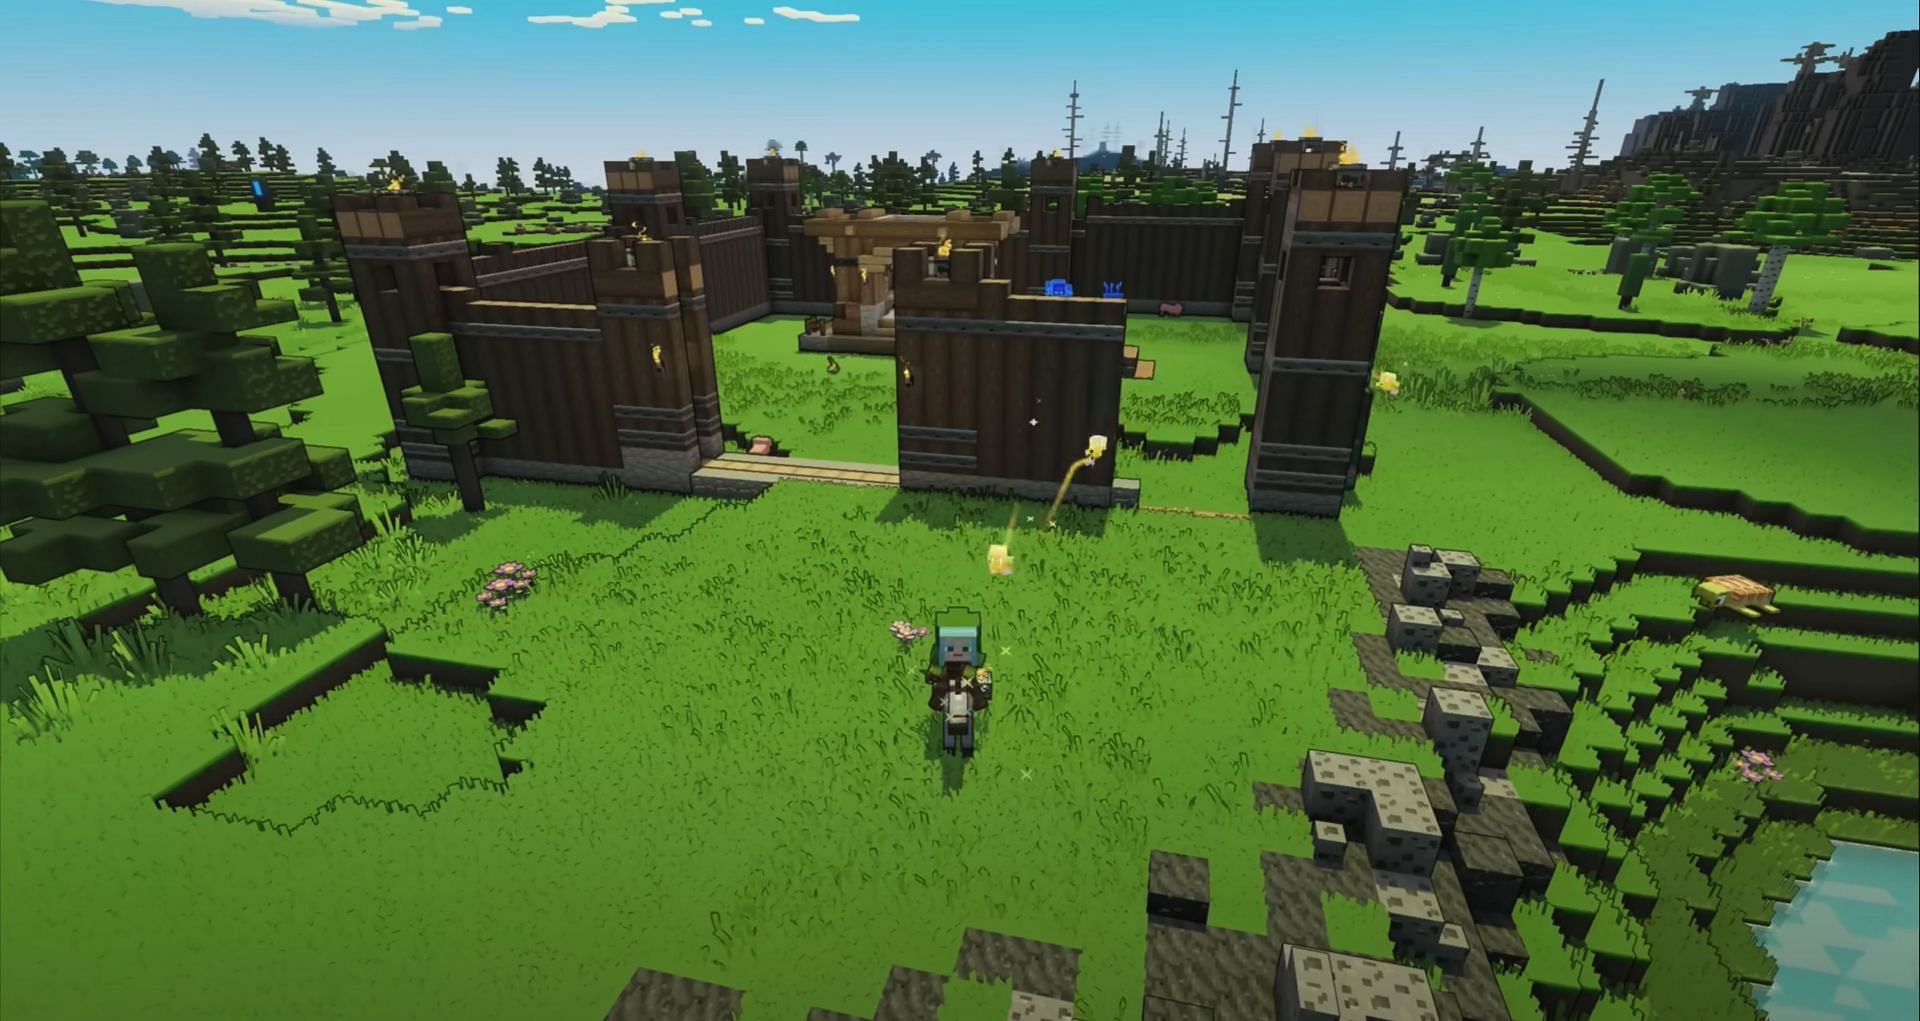 Building in Minecraft Legends (Image via Mojang Studios)